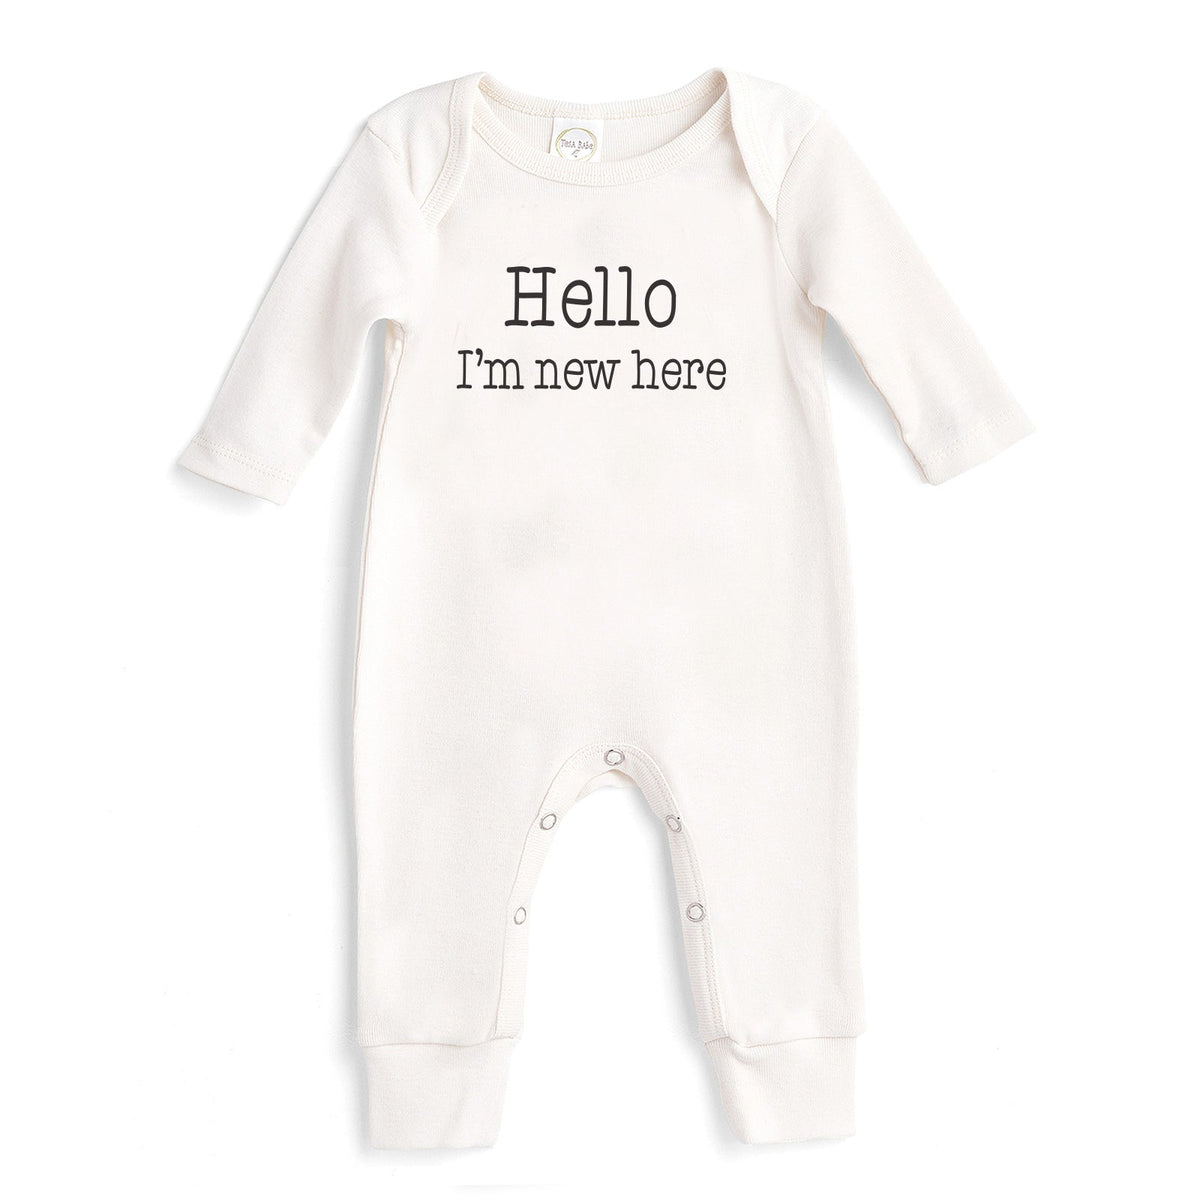 Tesa Babe Baby Unisex Clothes Romper / NB Hello, I'm New Here Romper